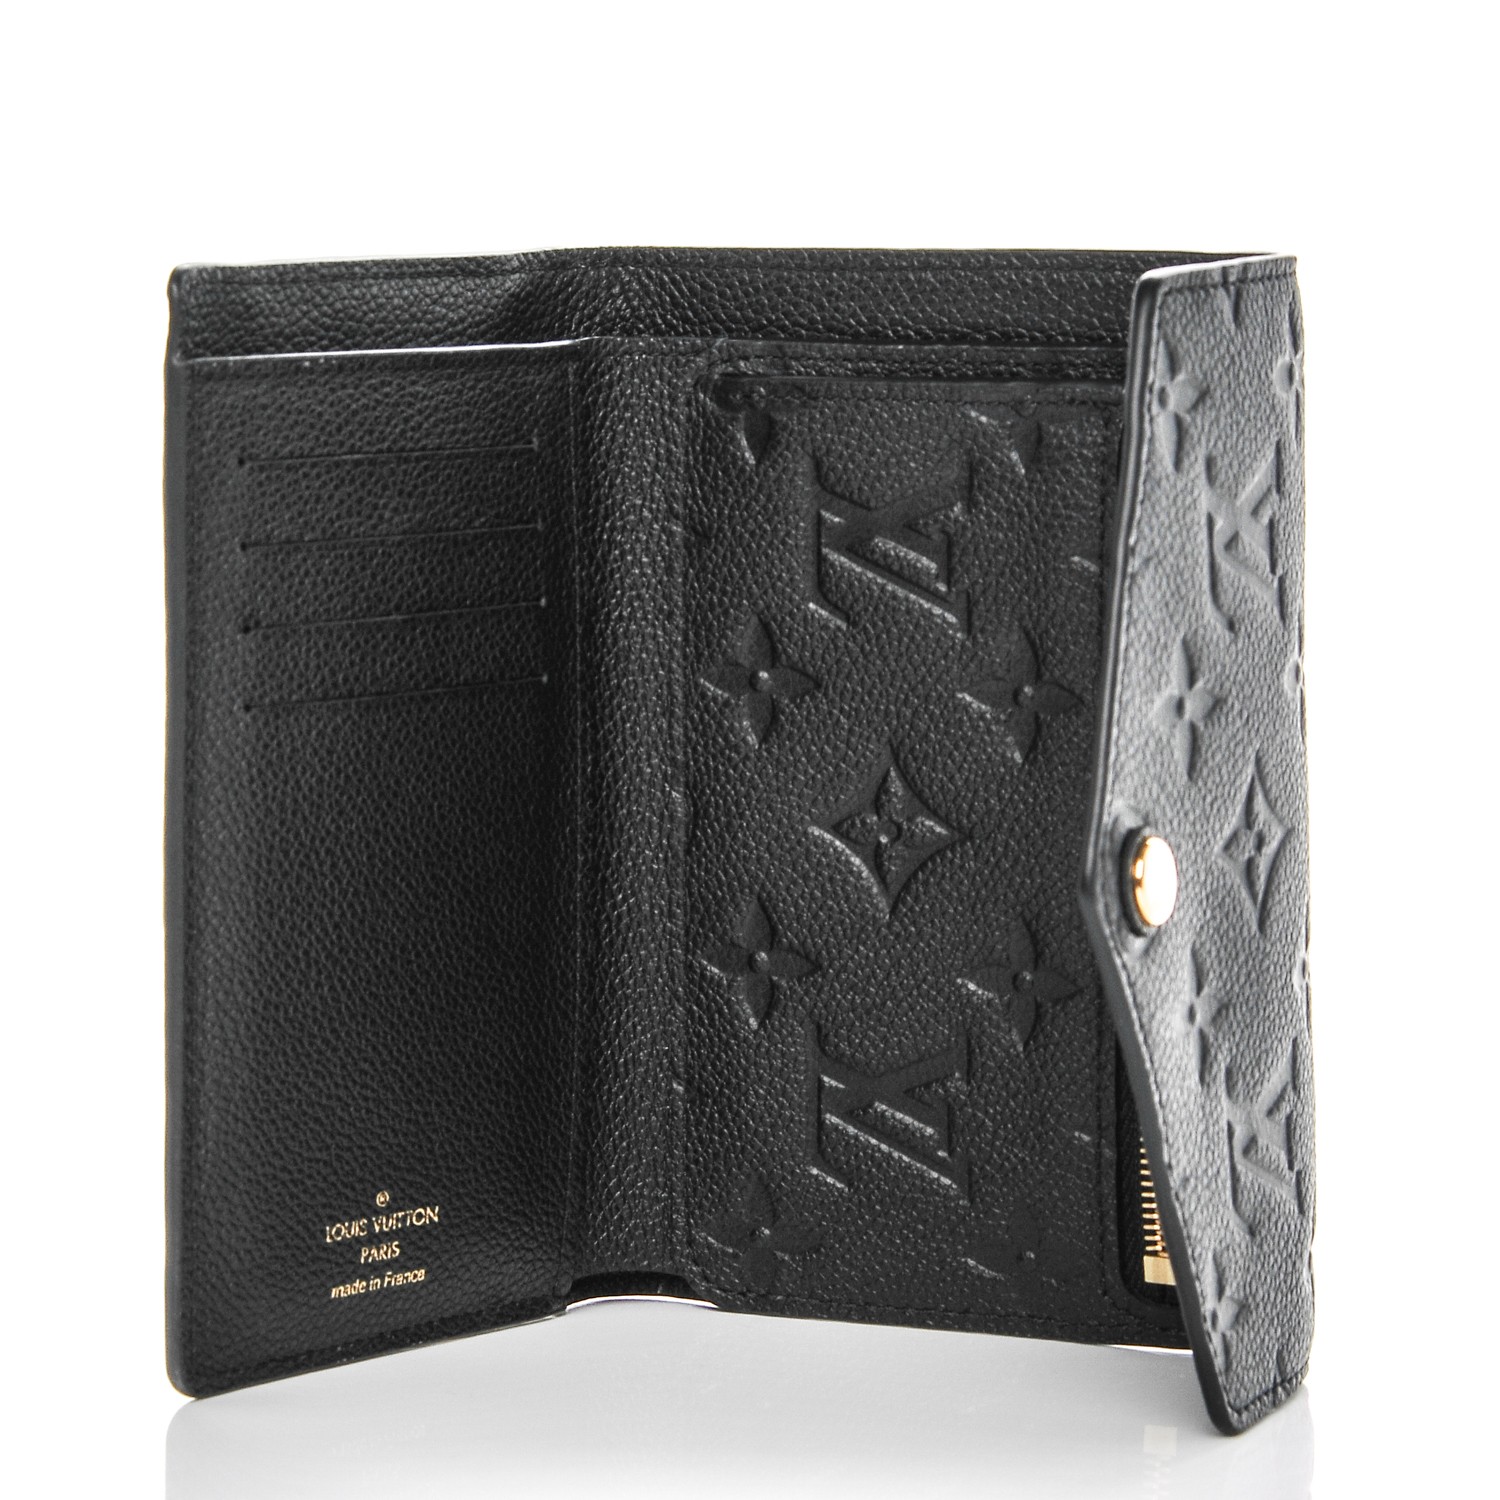 LOUIS VUITTON Empreinte Compact Curieuse Wallet Black 183945